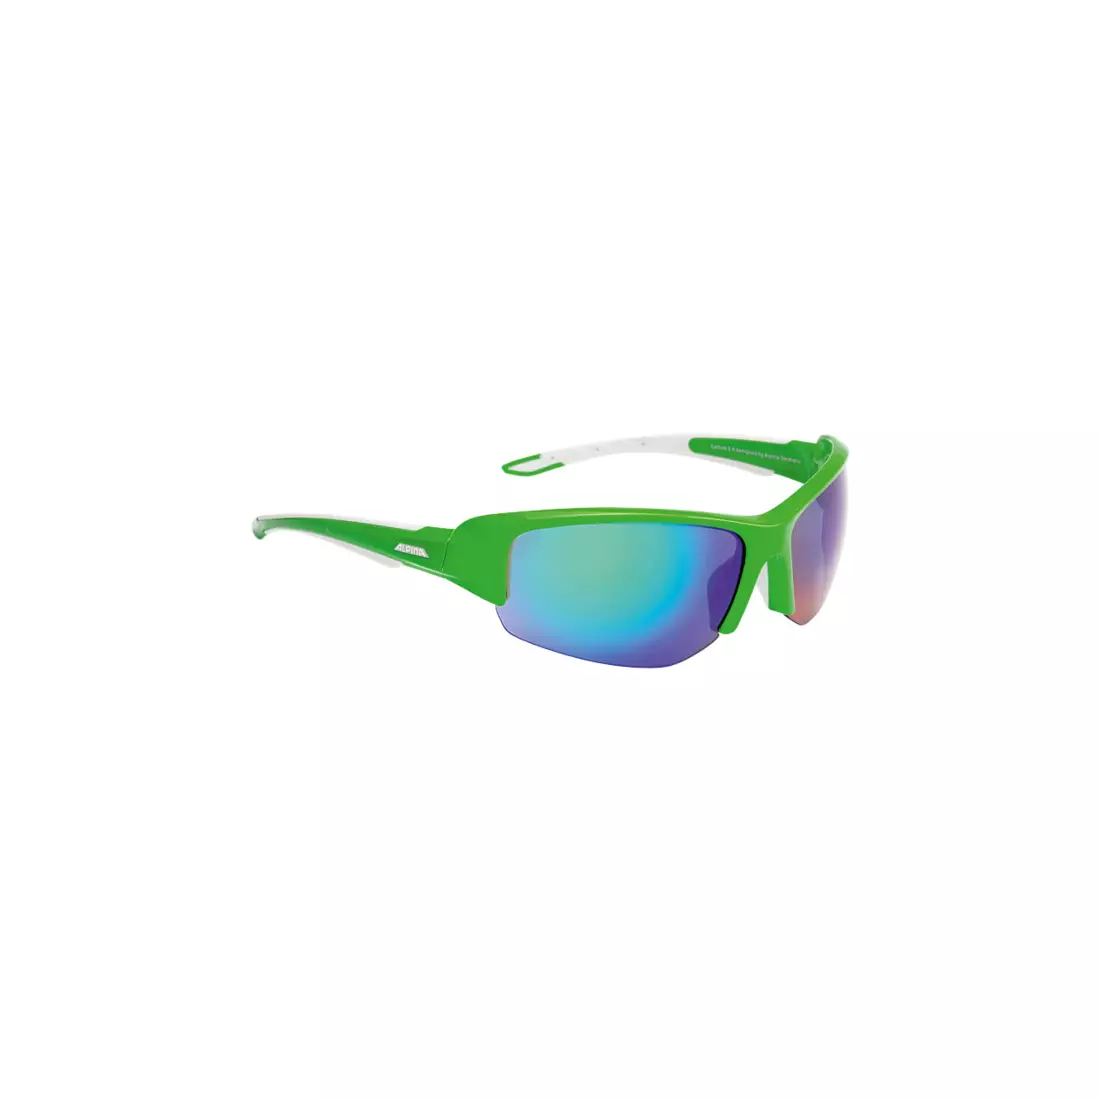 Športové okuliare ALPINA - CALLUM 2.0 - zeleno-biele / keramické zrkadlové sklo zelené.